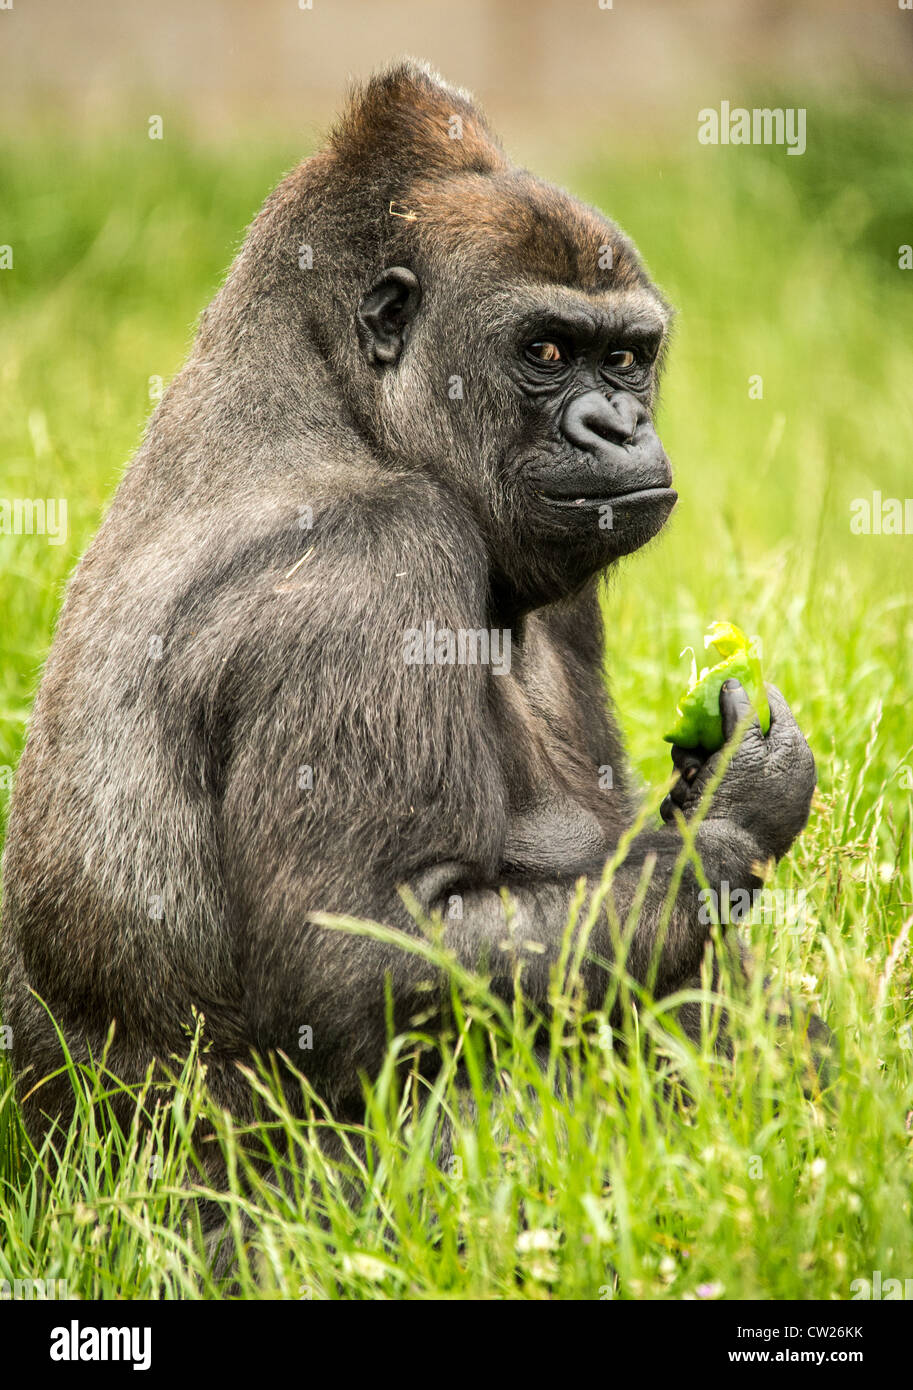 Western lowland gorilla eating Stock Photo